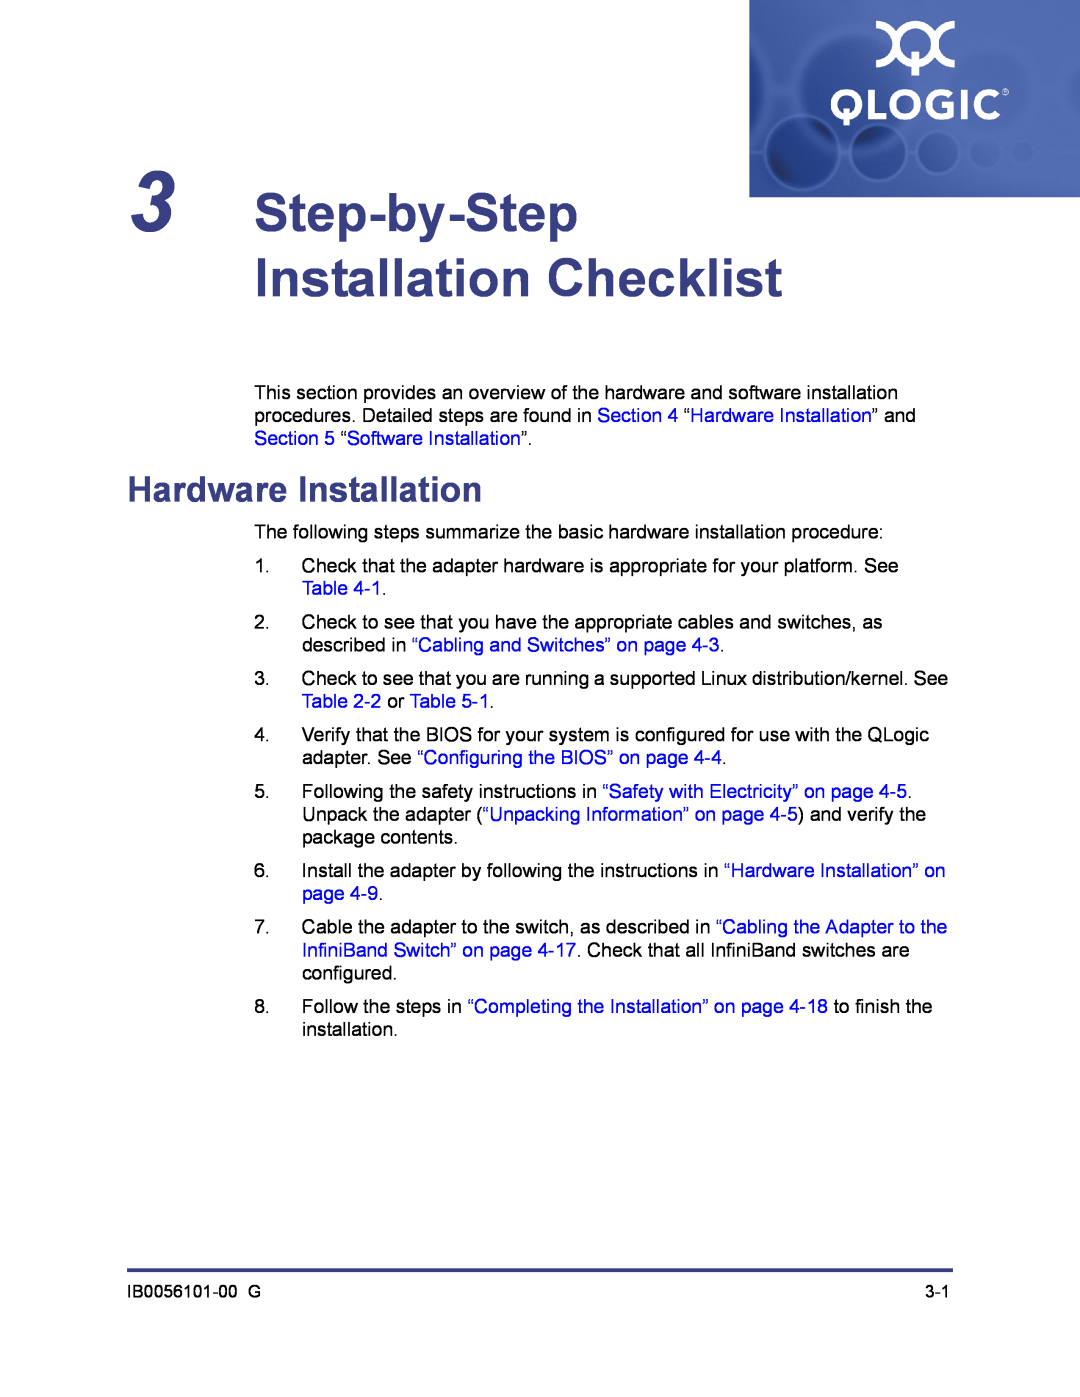 Q-Logic IB0056101-00 G manual Step-by-Step Installation Checklist, Hardware Installation 